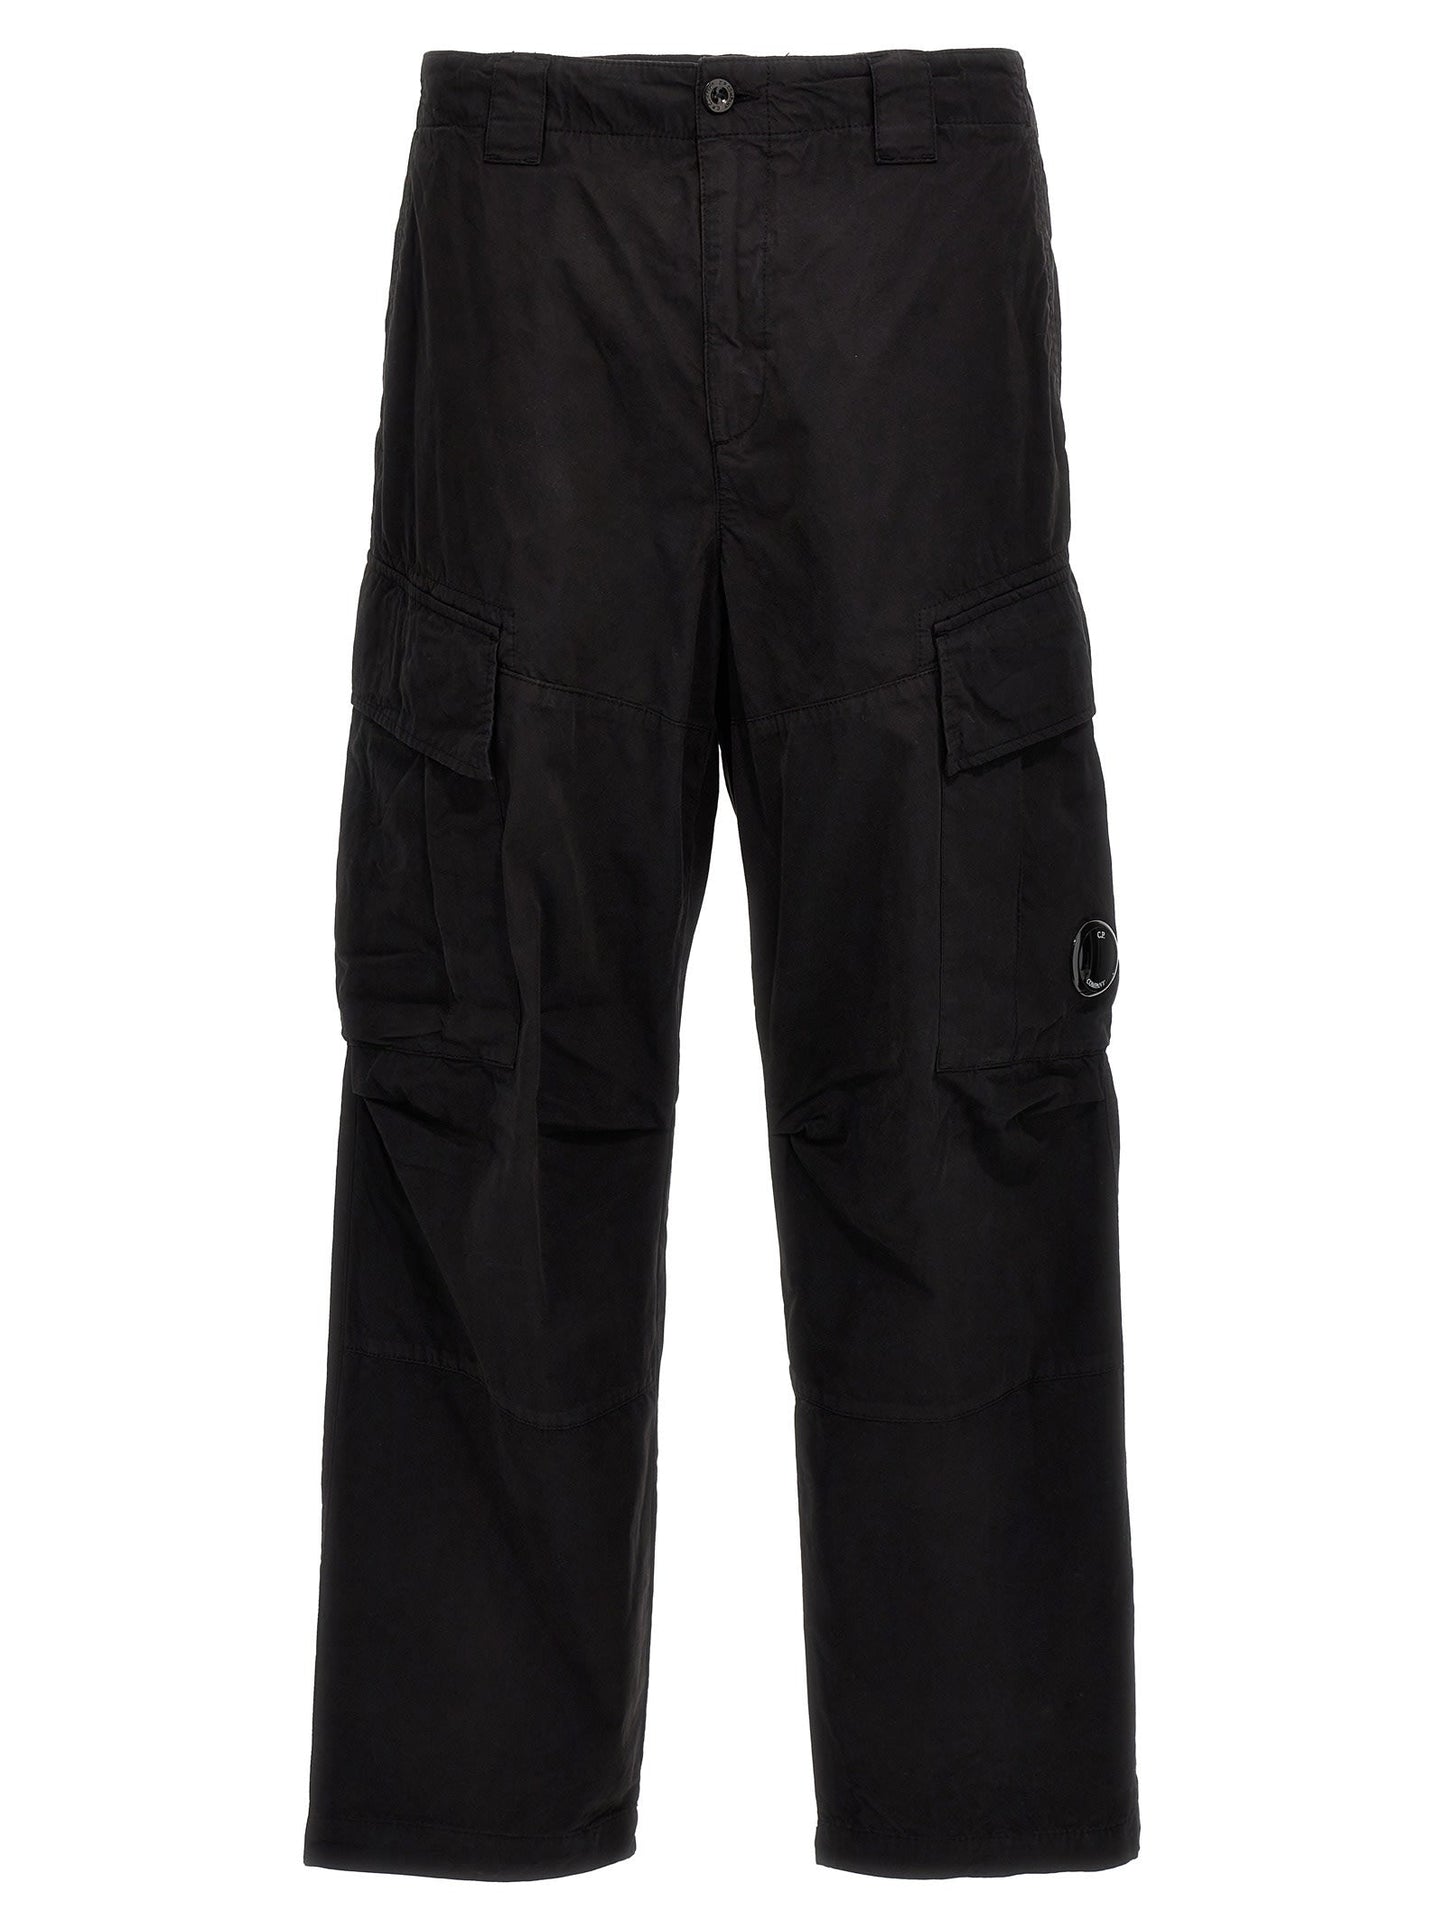 C.P. Company Black Cargo Trousers